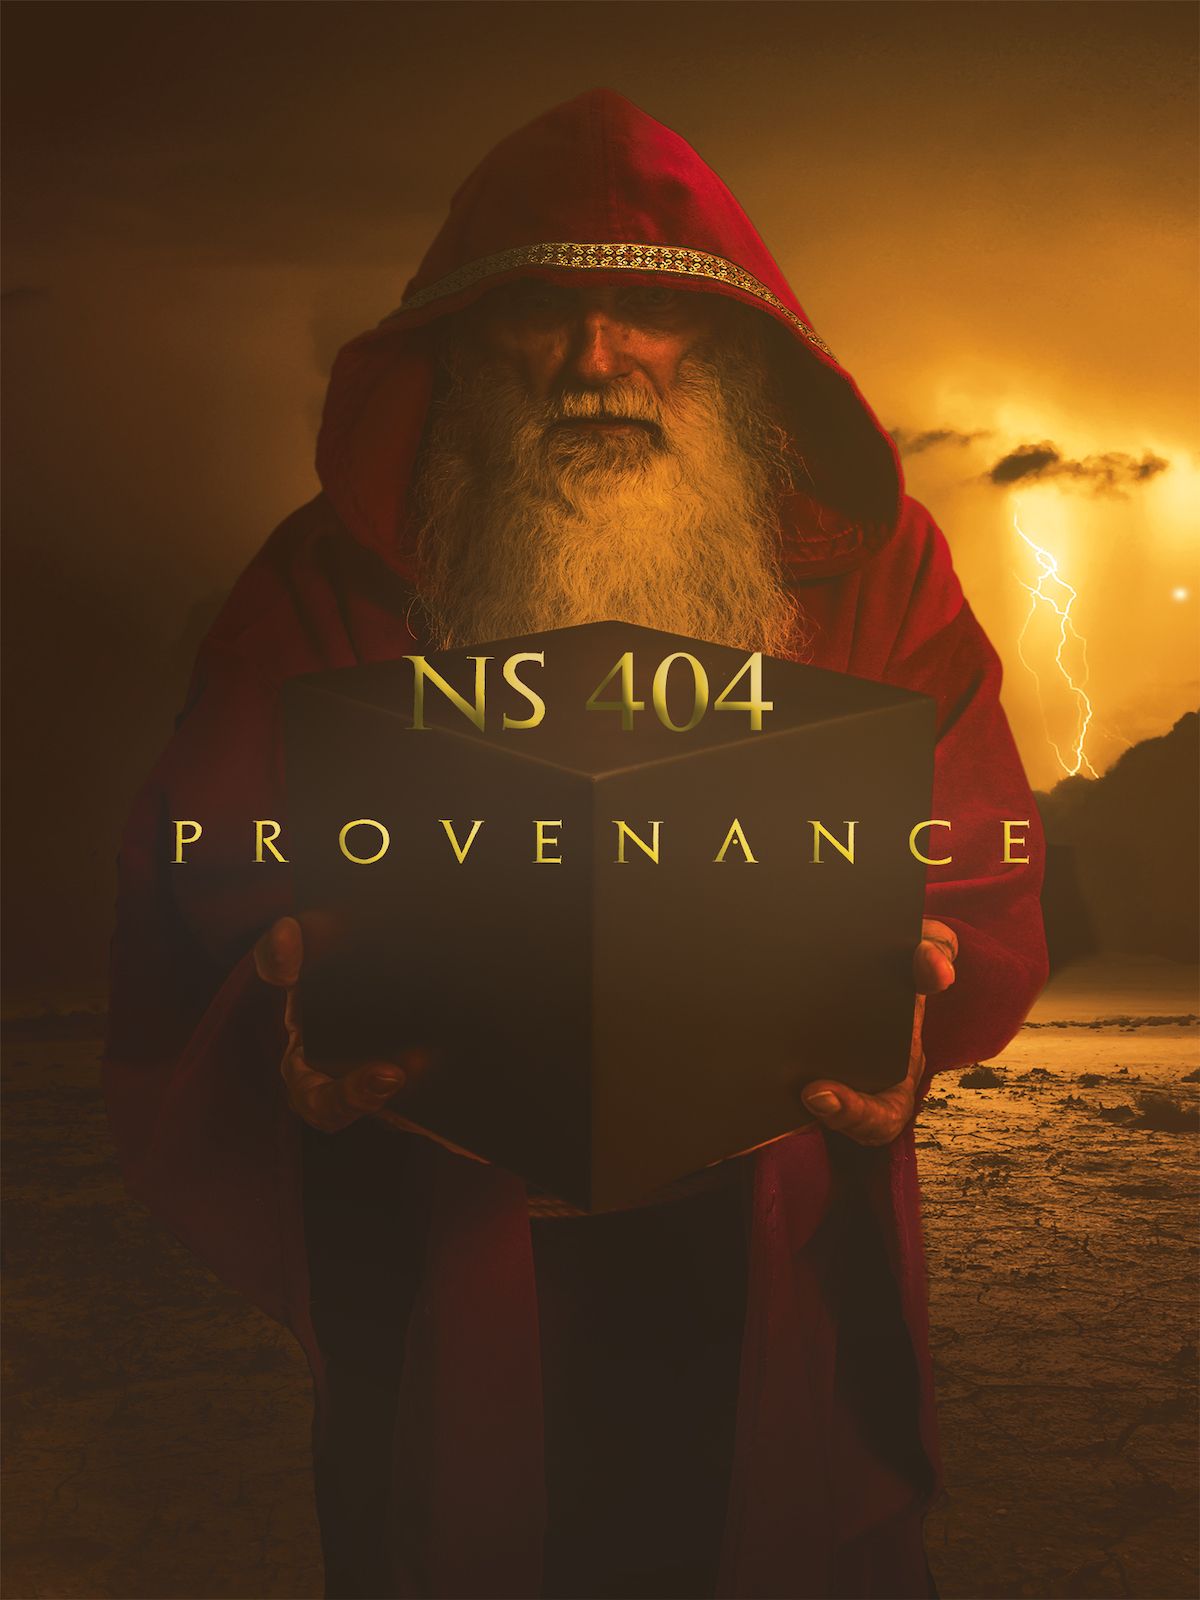 NS404 (Provenance)